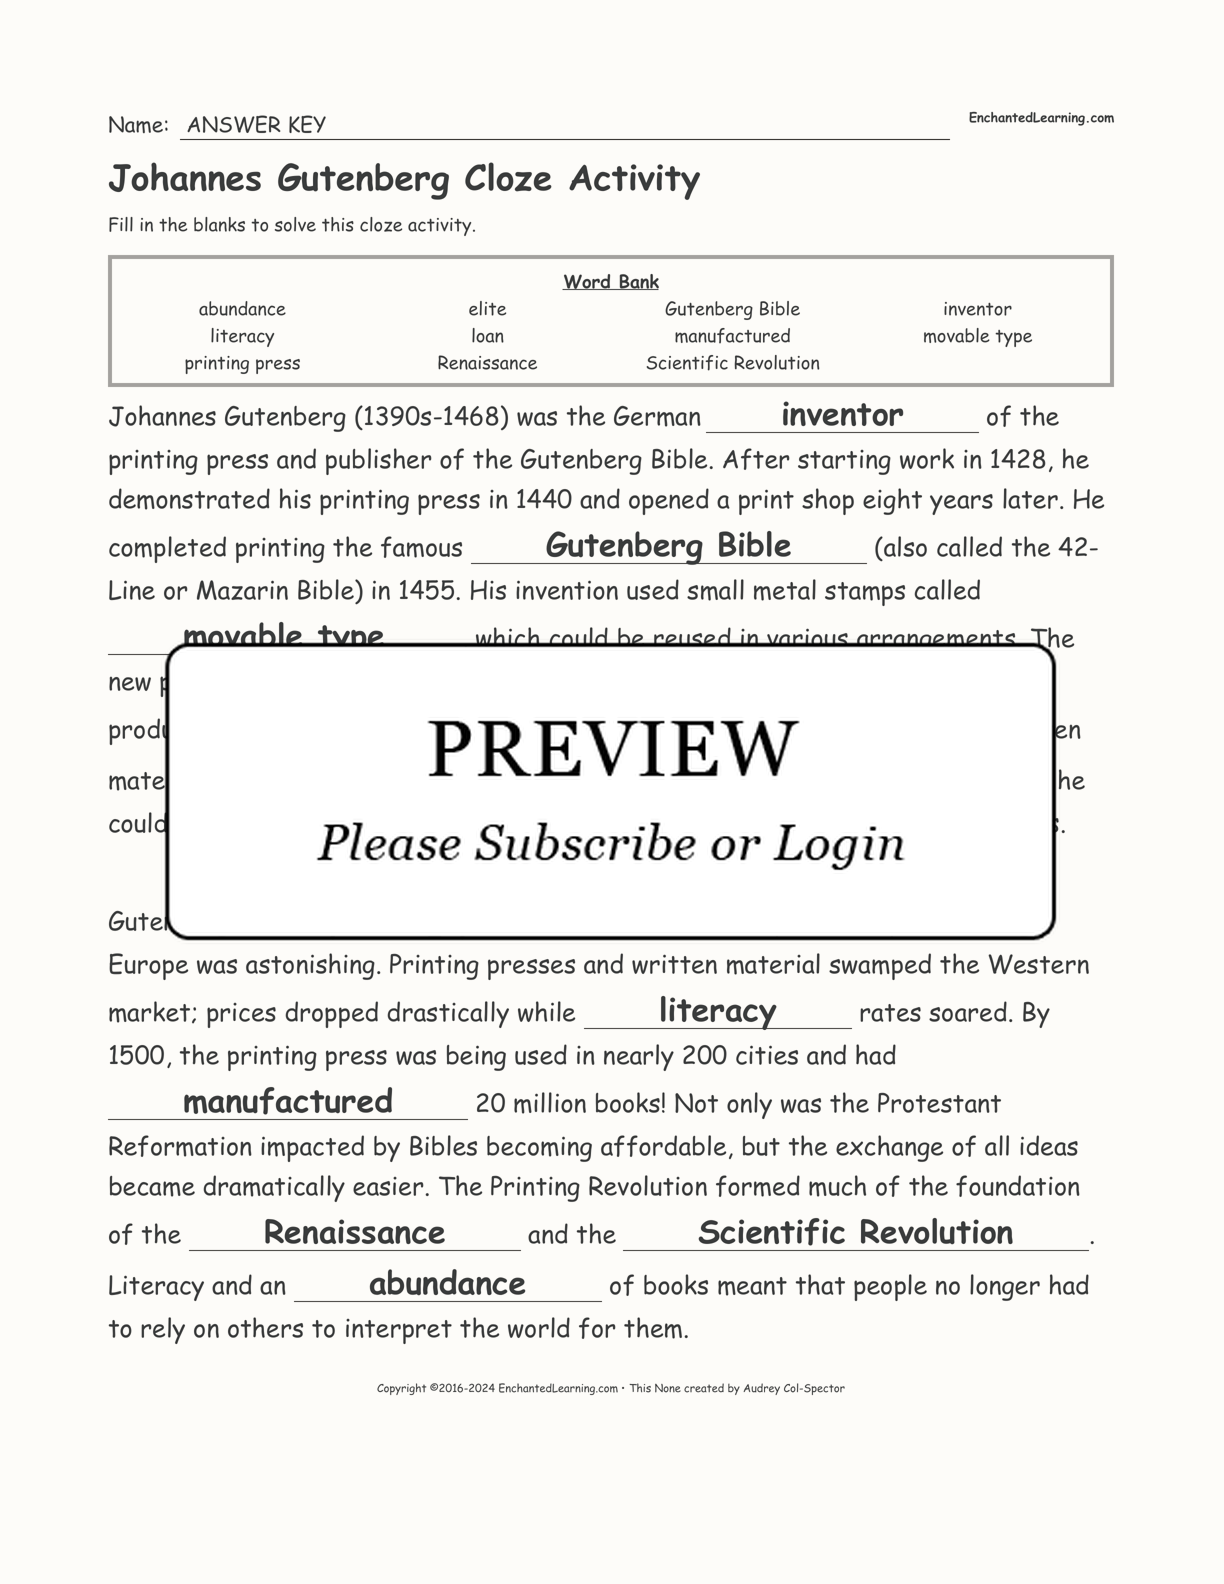 Johannes Gutenberg Cloze Activity interactive worksheet page 2